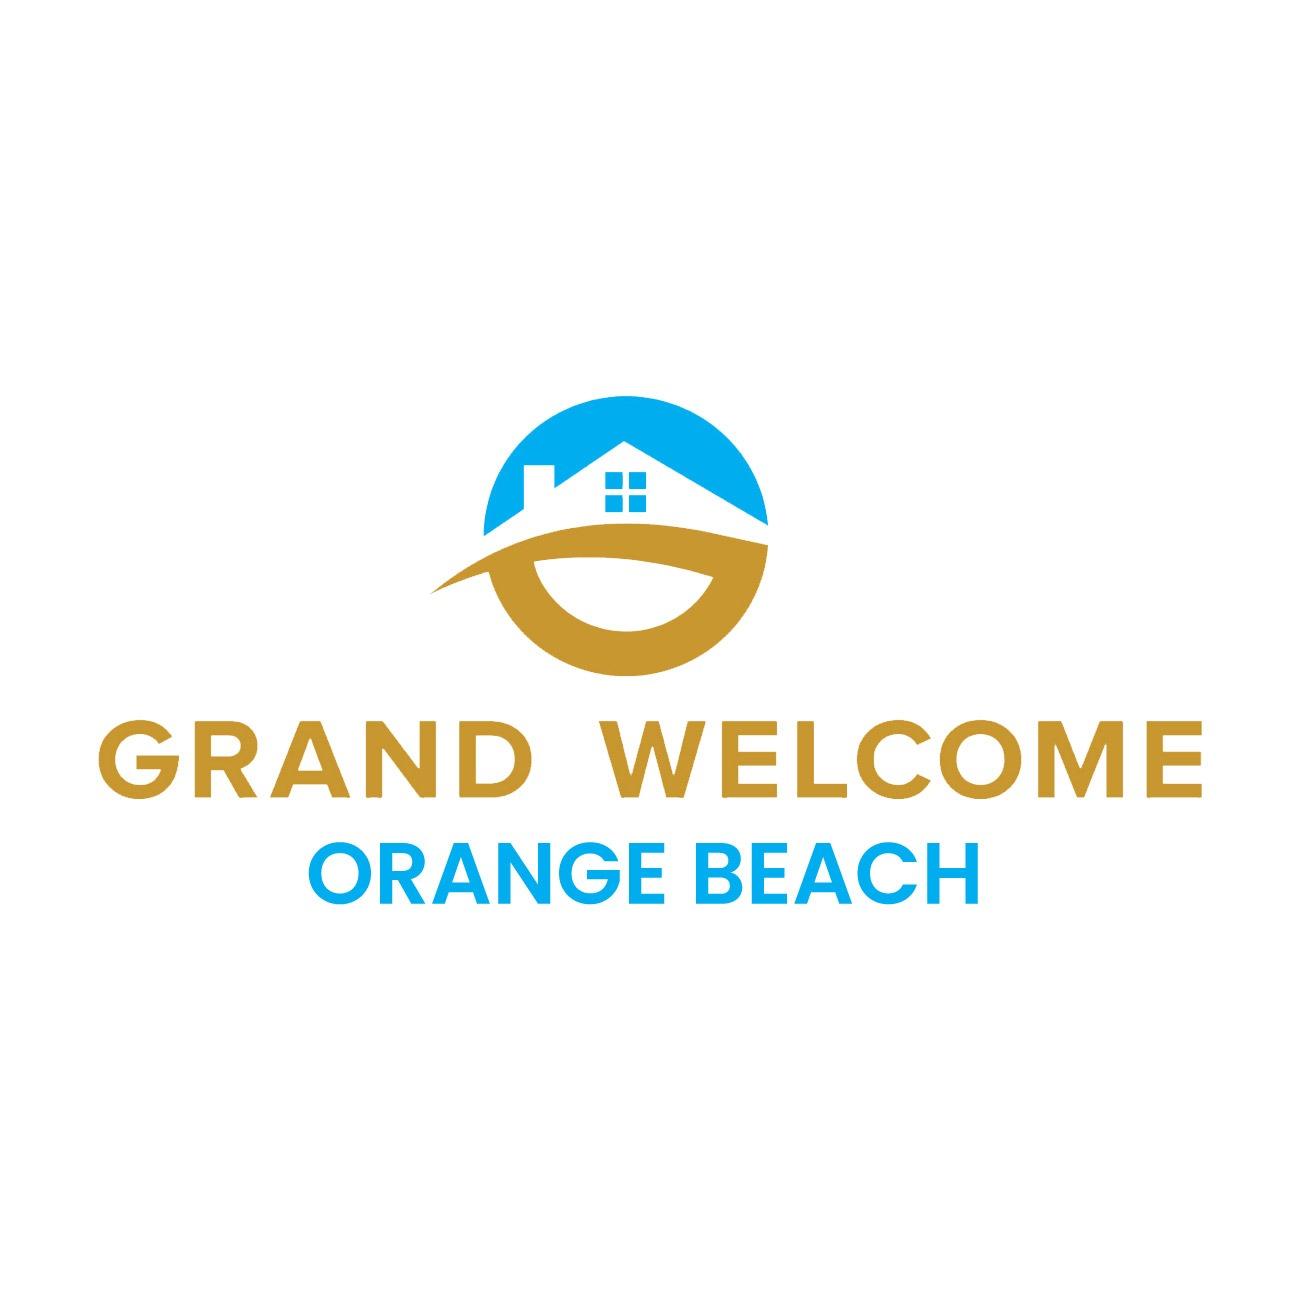 Grand Welcome Orange Beach Vacation Rental Management - Orange Beach, AL 36561 - (251)220-9225 | ShowMeLocal.com